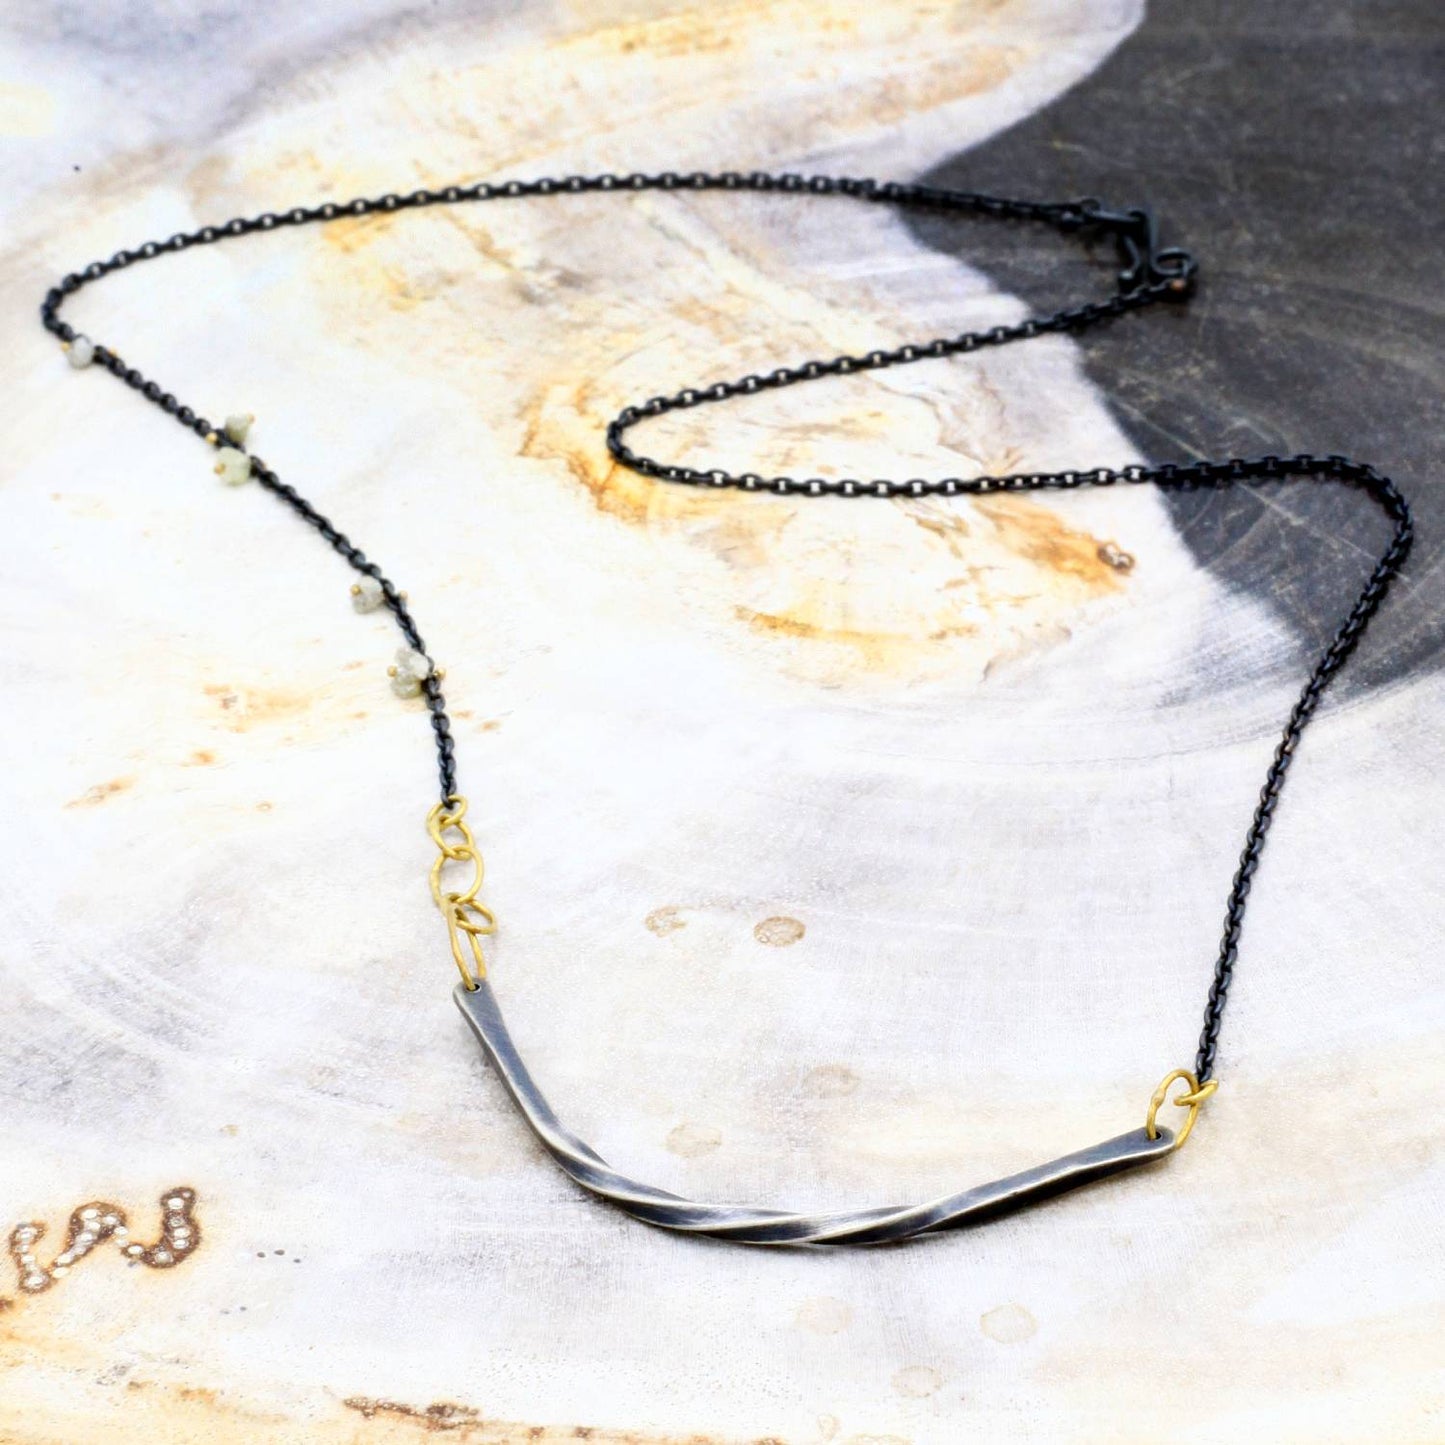 Sarah McGuire Studio | "Bias Arc" 18k Gold, Raw Diamond + Sterling Silver Necklace | Firecracker